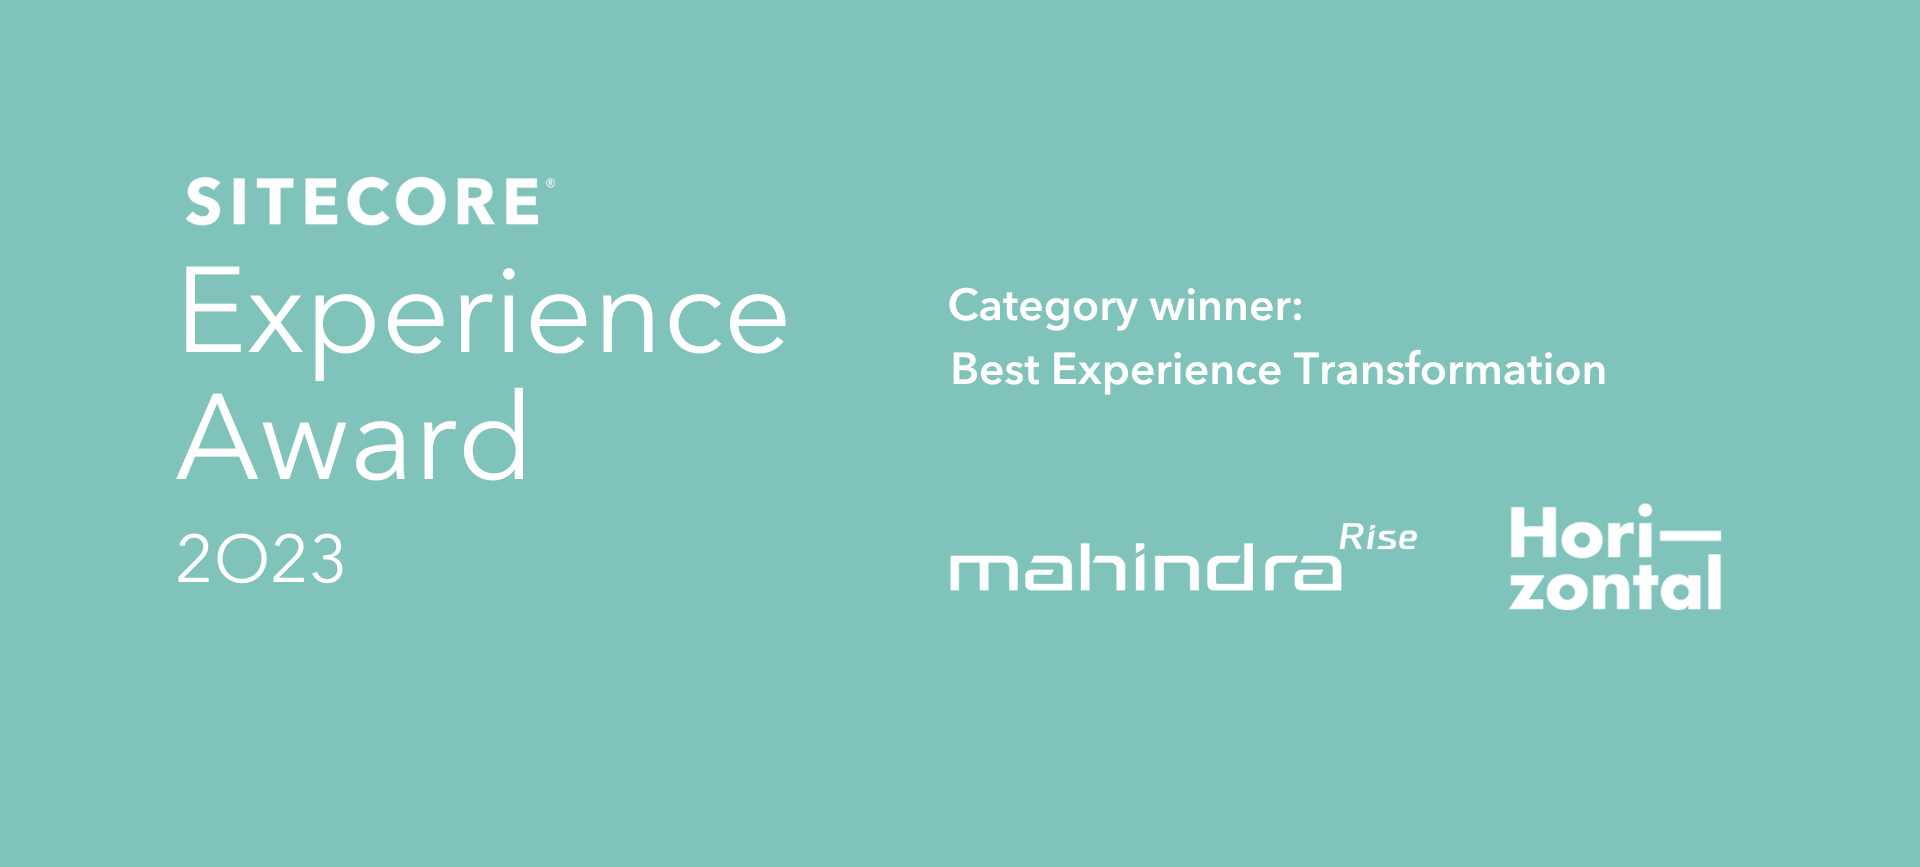 Horizontal Digital Wins 2023 Sitecore Experience Award for Best Experience Transformation in APJ Region